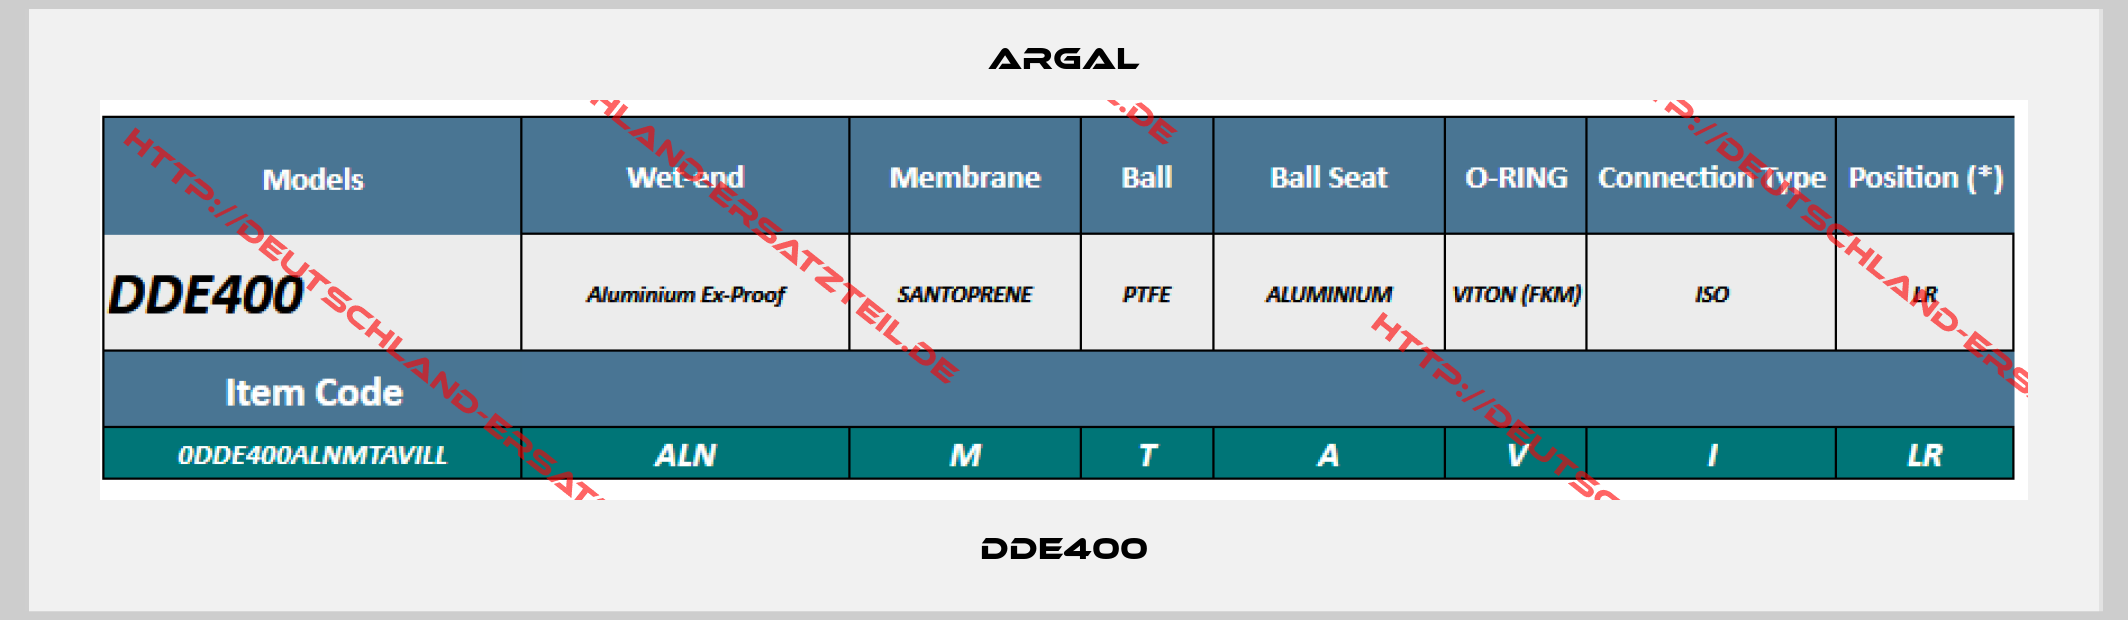 Argal-DDE400